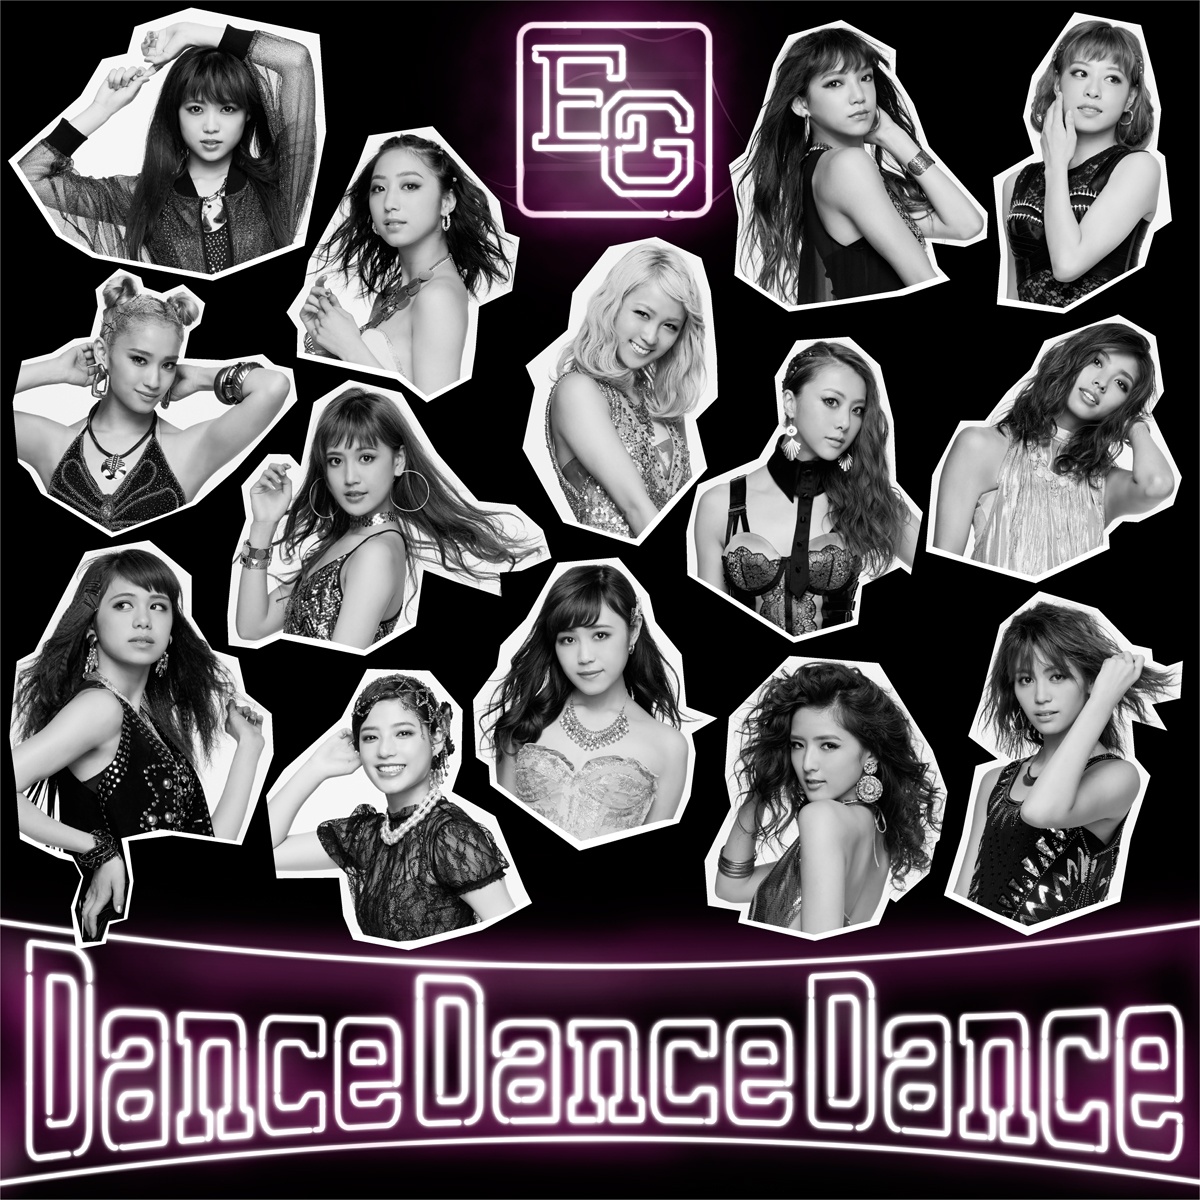 Dance Dance Dance(E-Girls演唱歌曲)